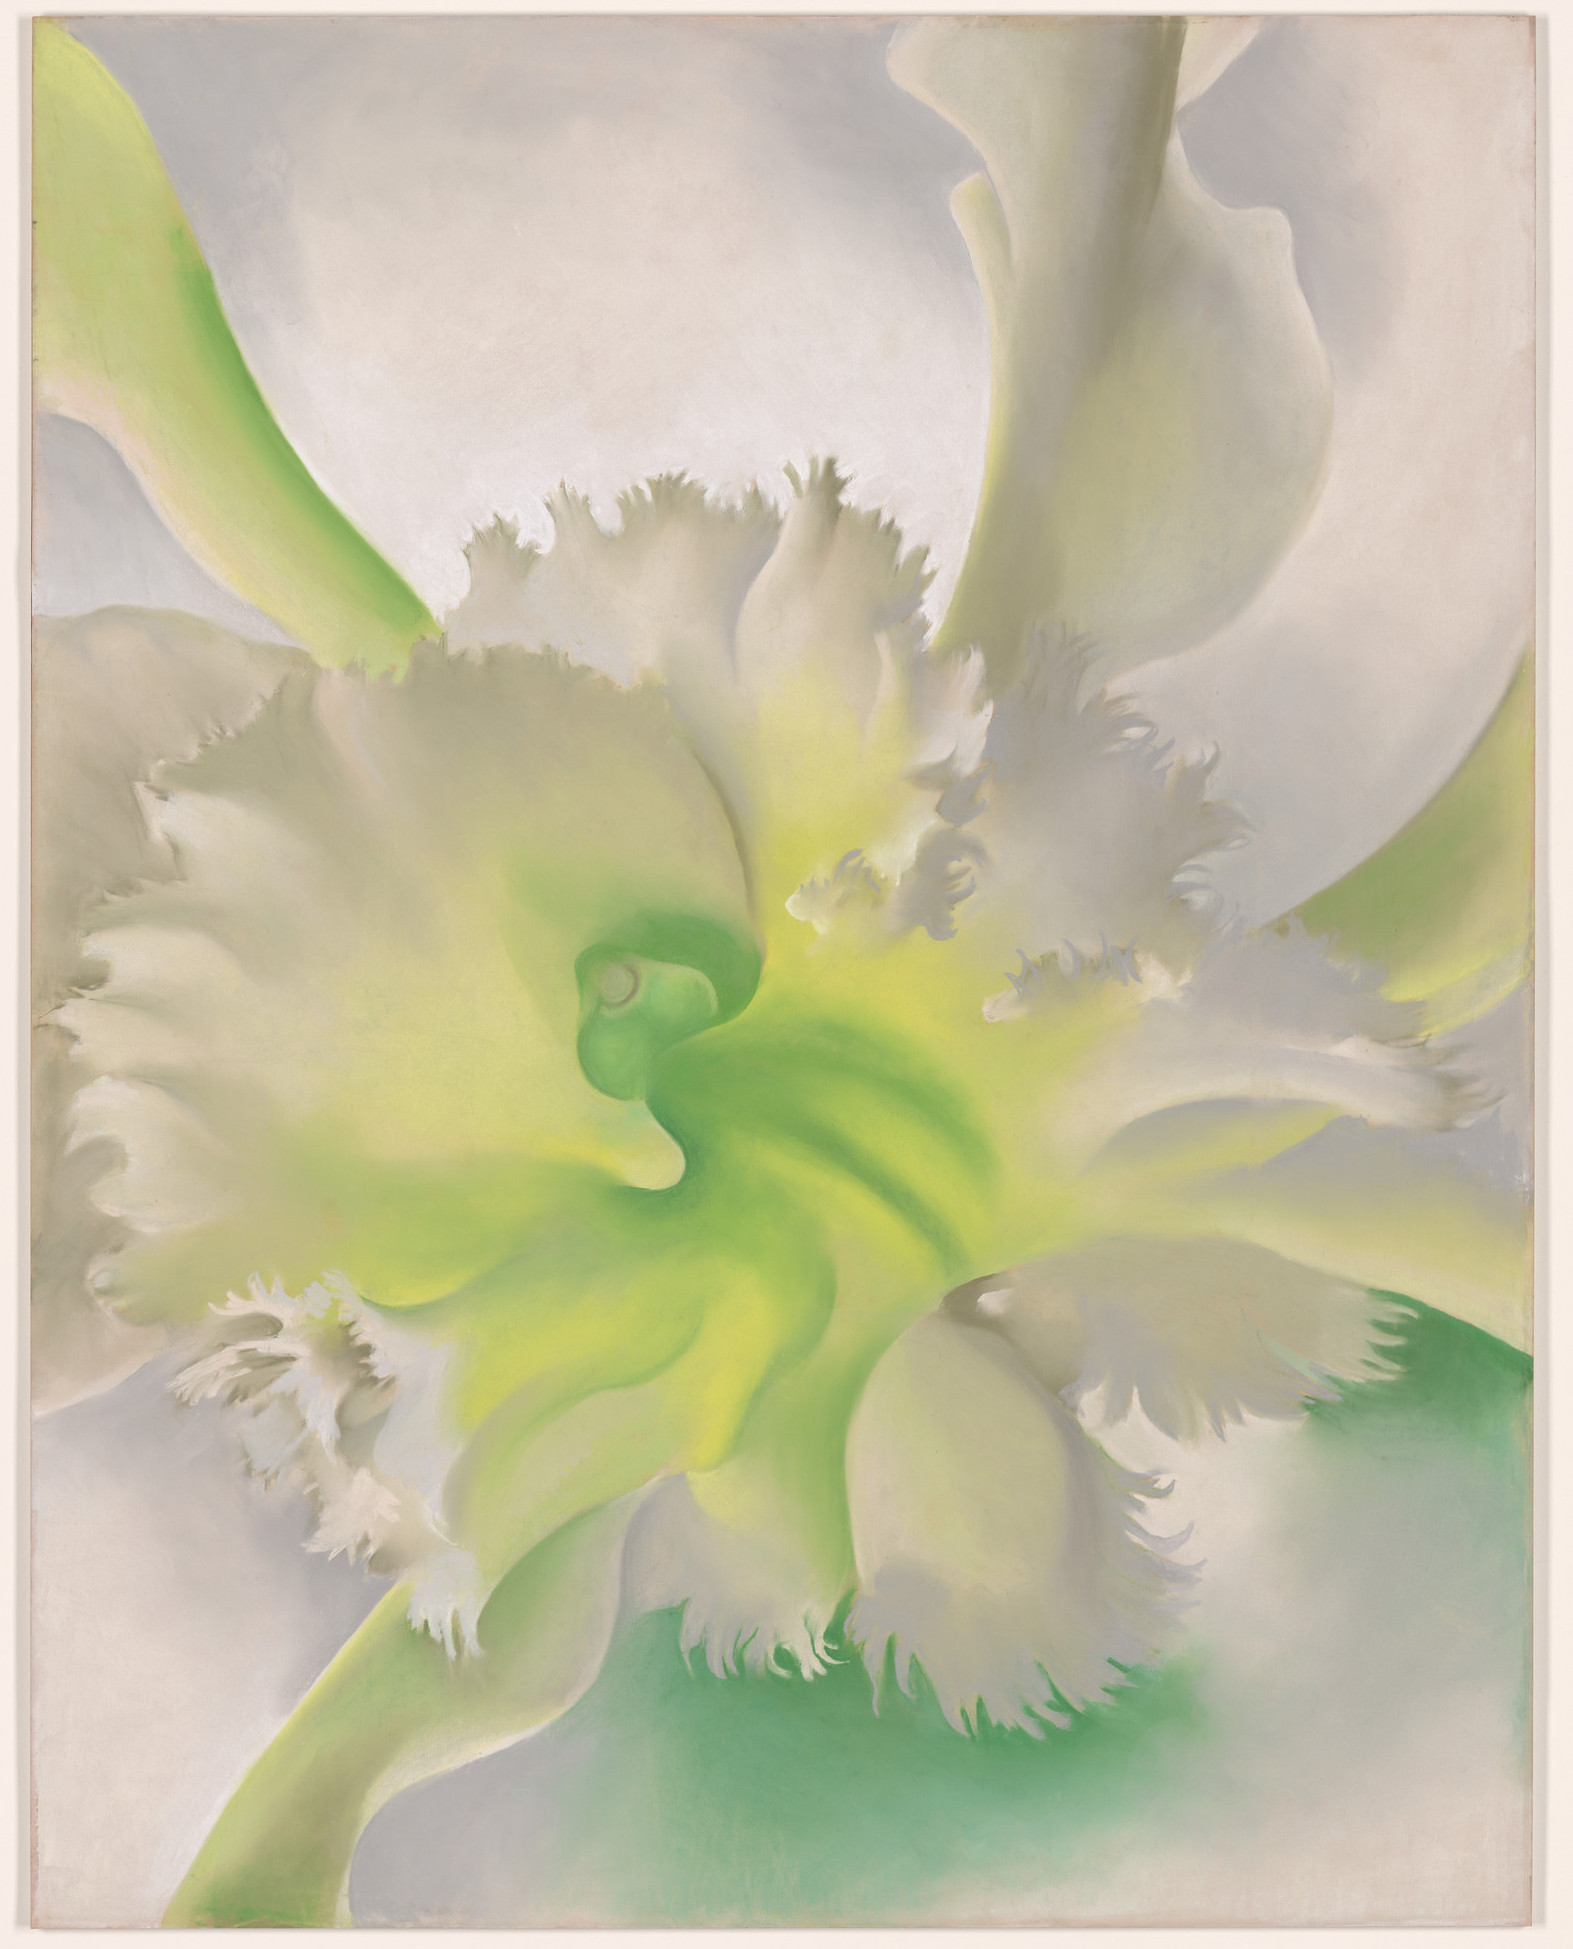 Georgia O'Keeffe. An Orchid. 1941. Source: MoMA